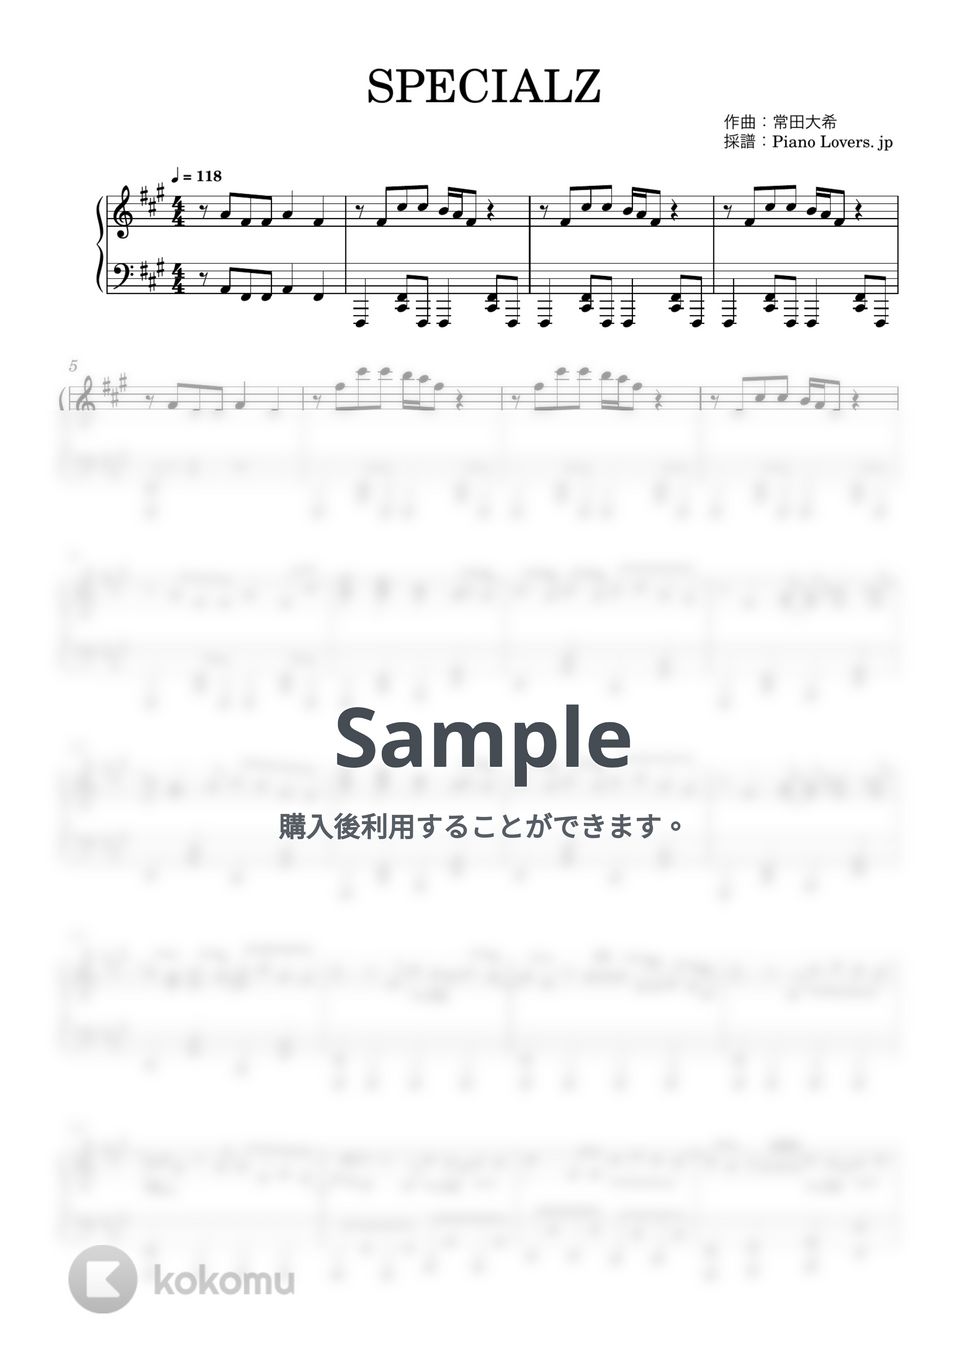 King Gnu - SPECIALZ (ピアノ楽譜 / 初級) by Piano Lovers. jp